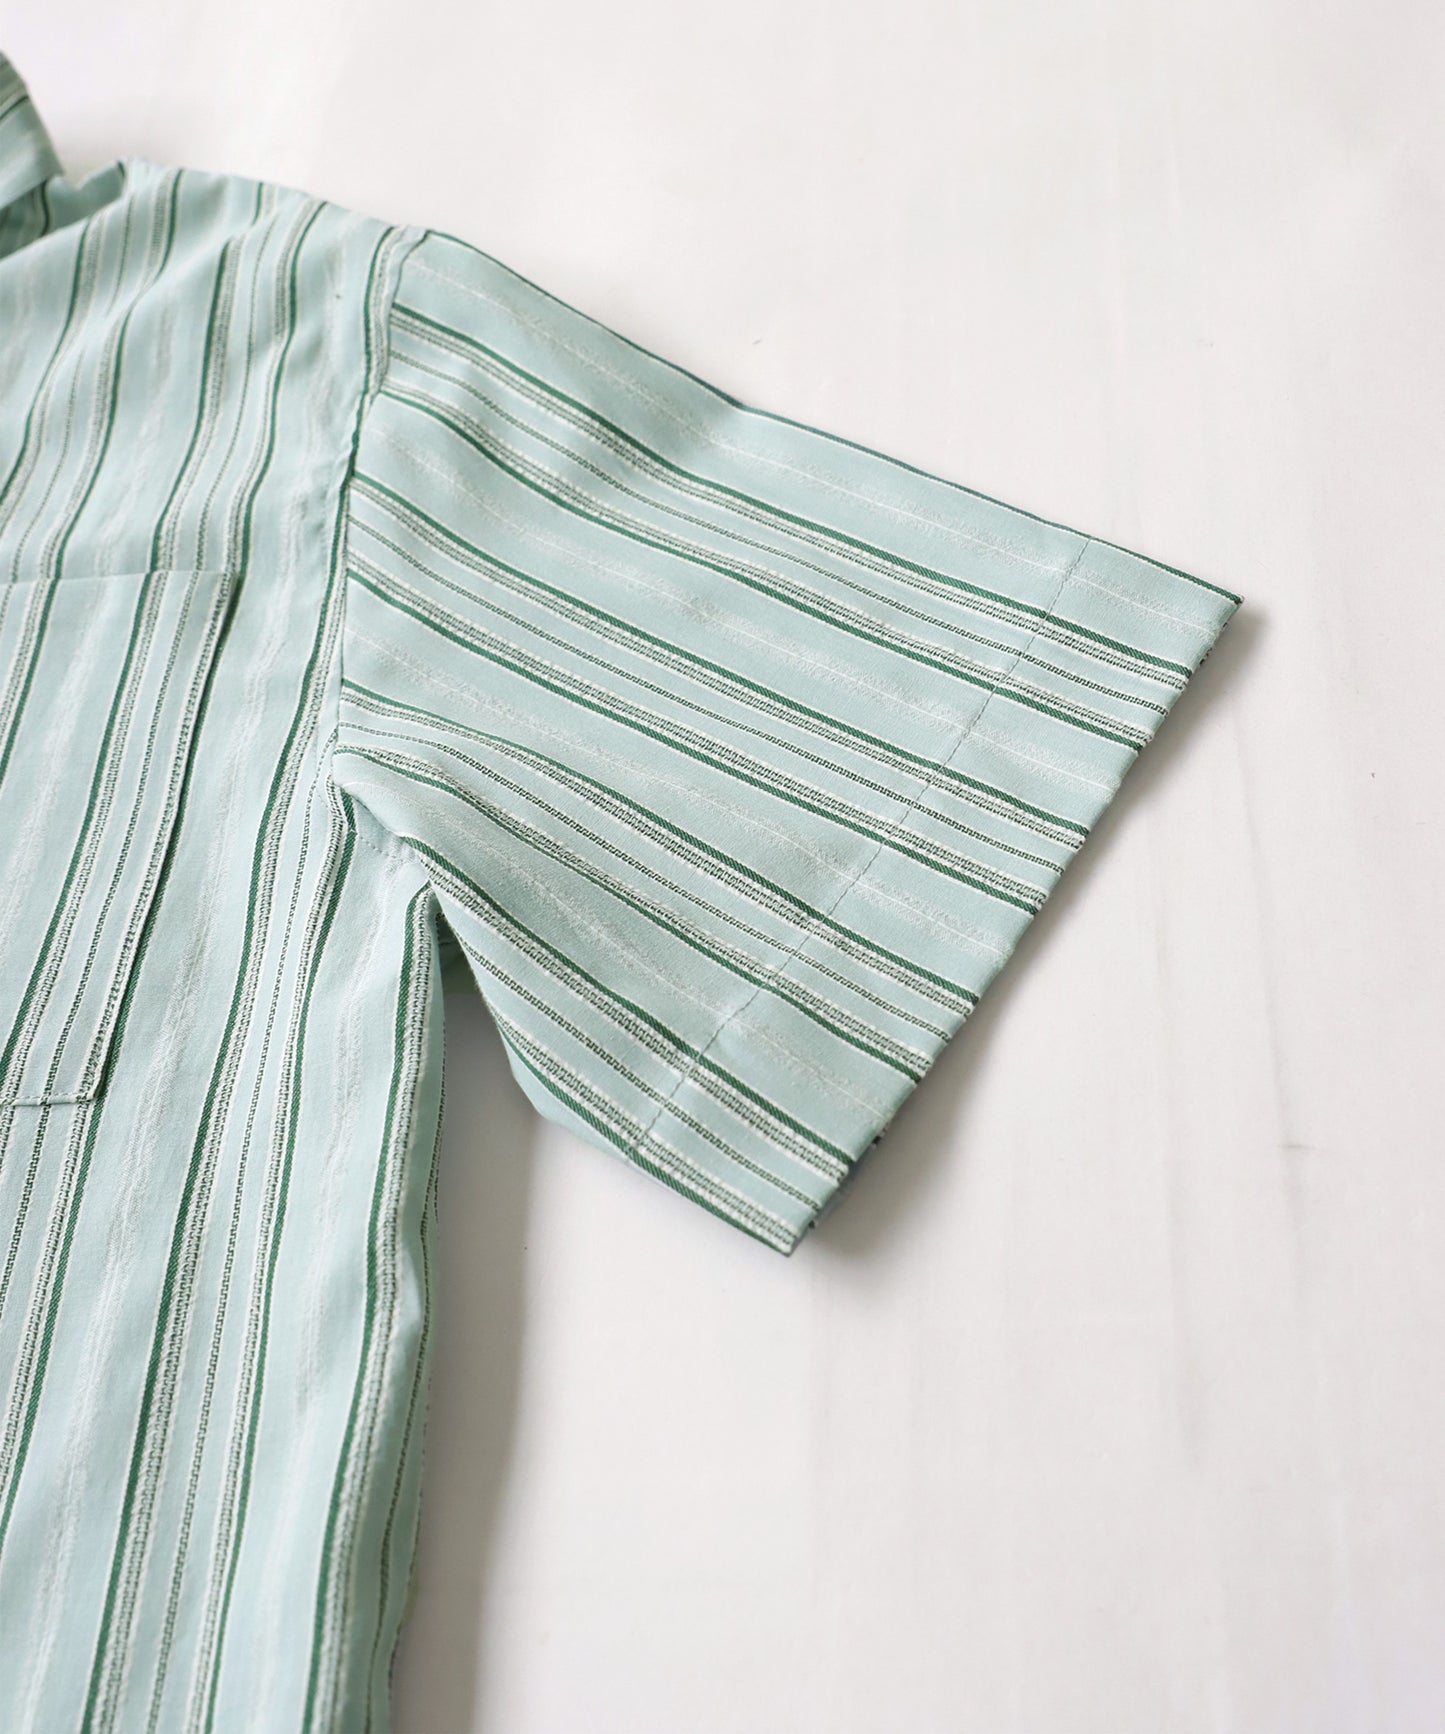 Asymmetric Striped Shirt Ladies